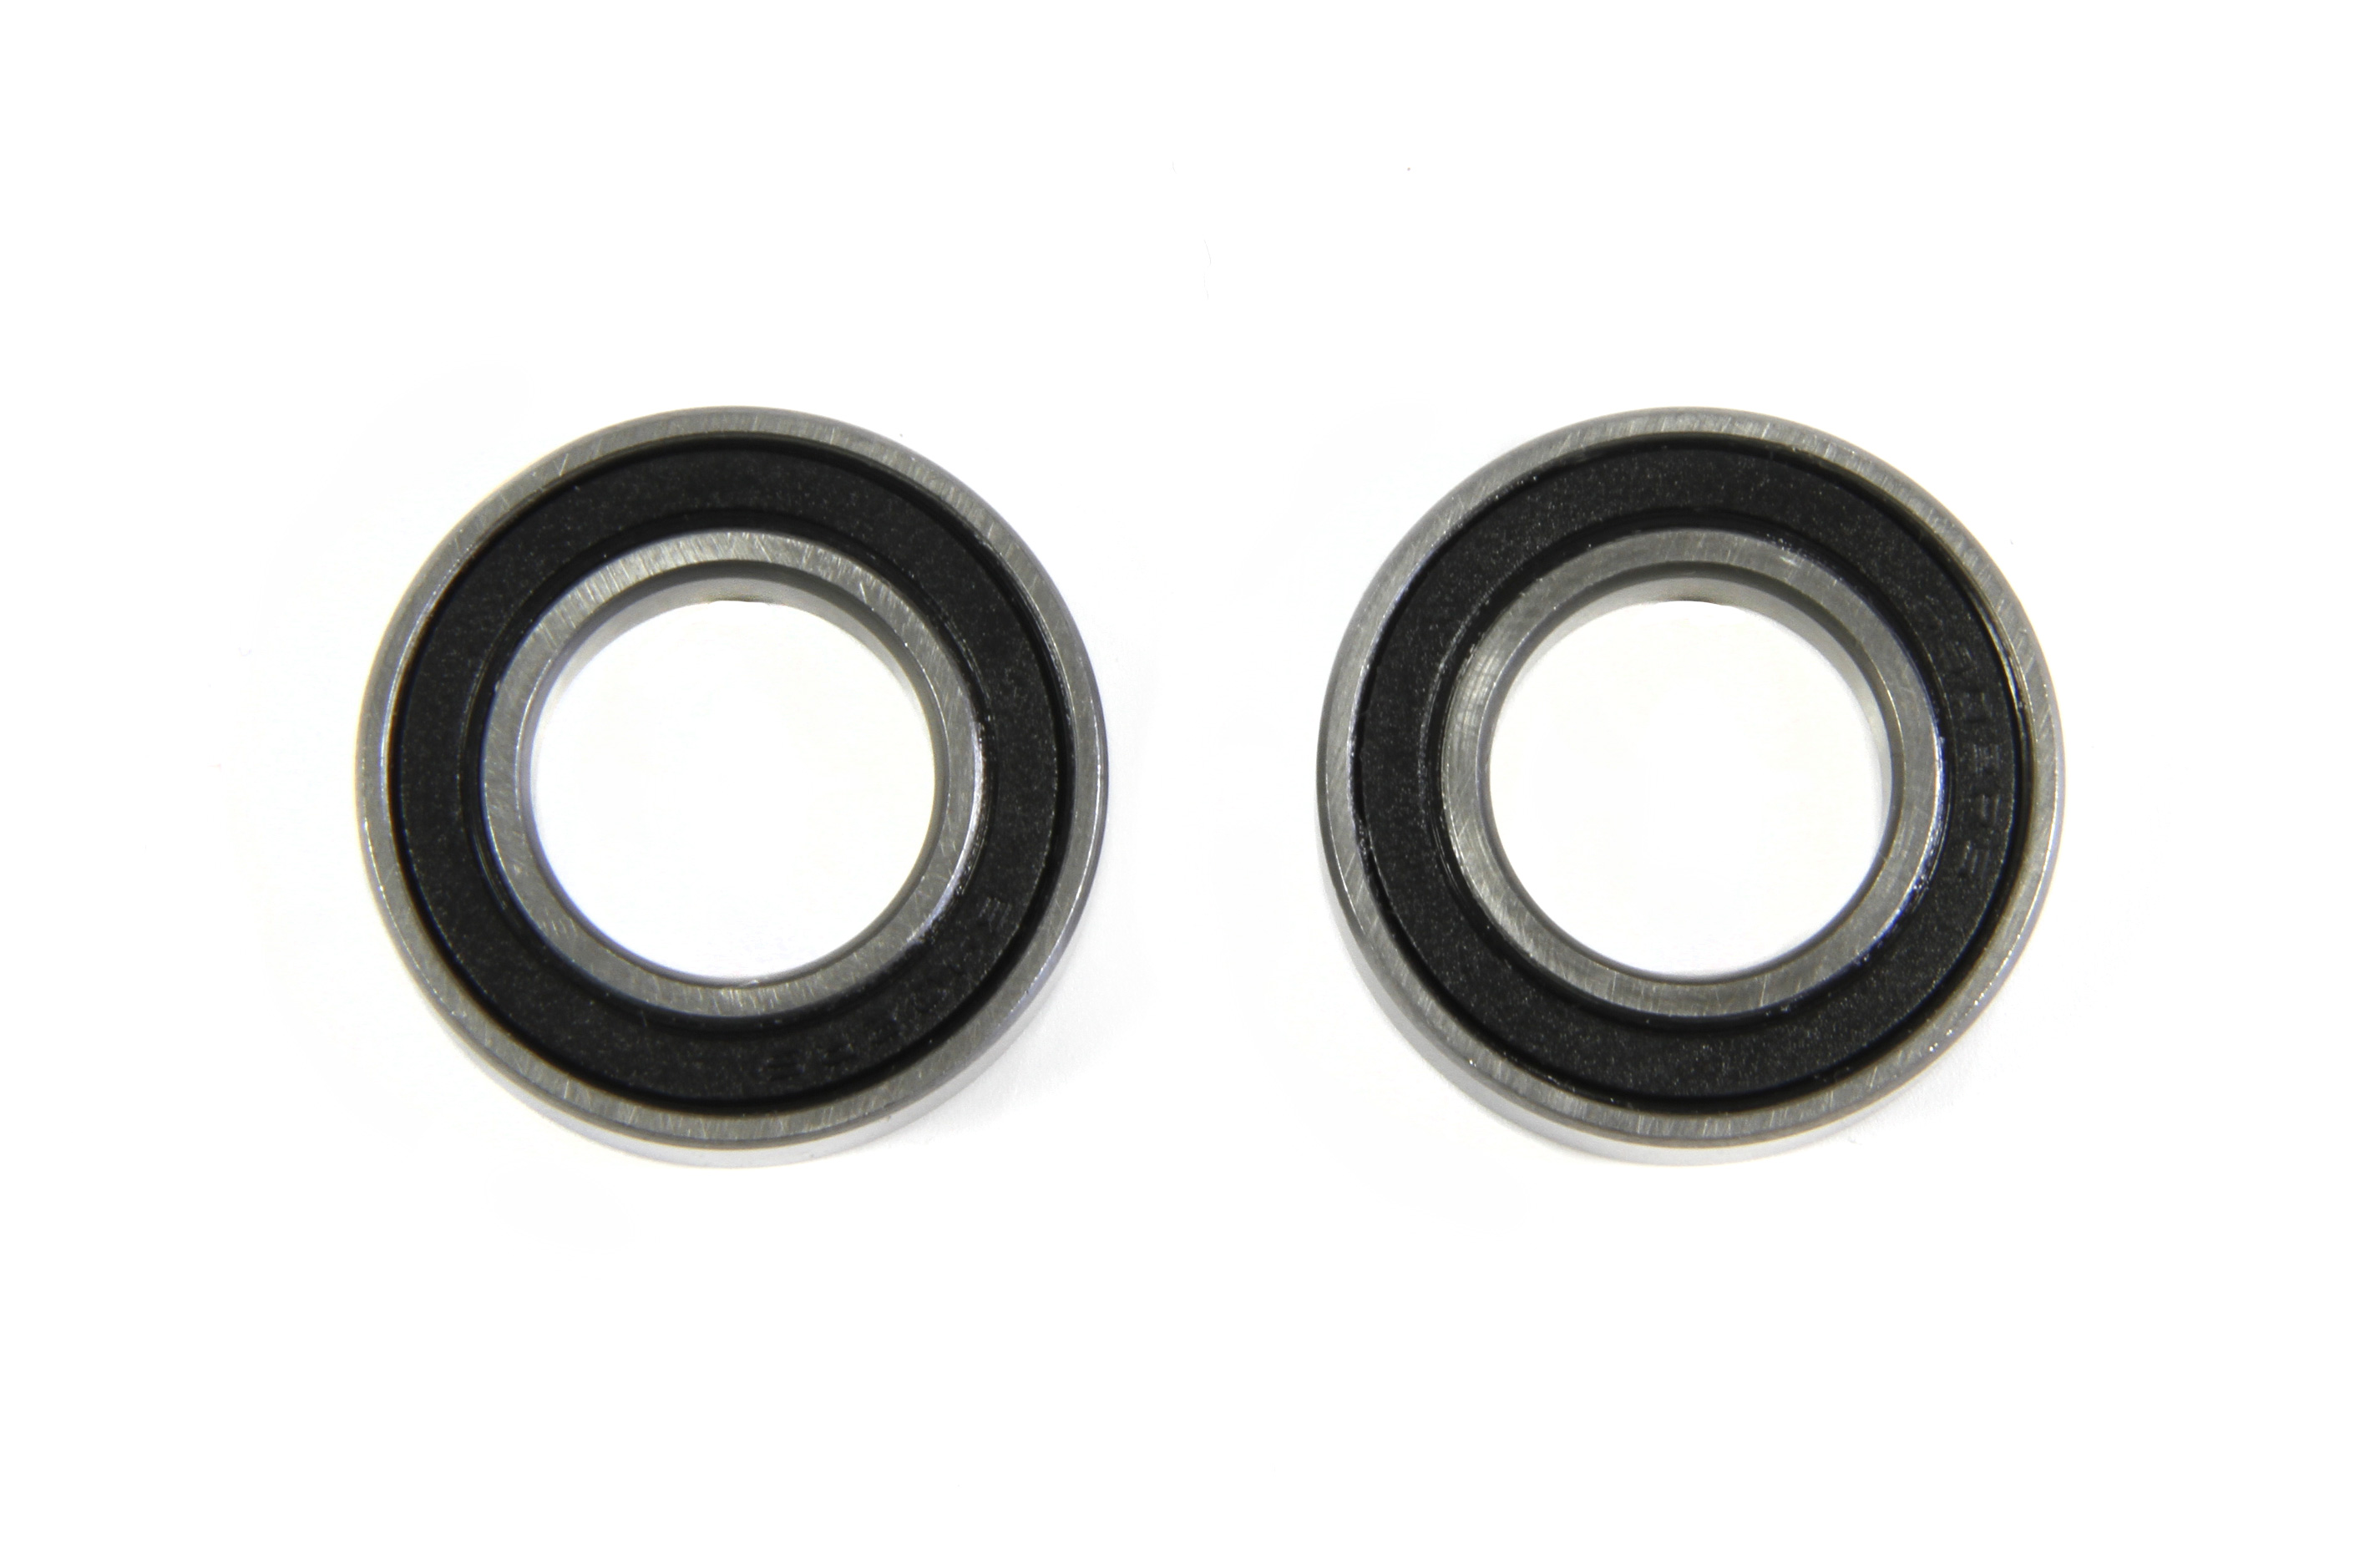 8493 FG Ceramic ball bearings, sealed, 15 x 28 x 7 mm